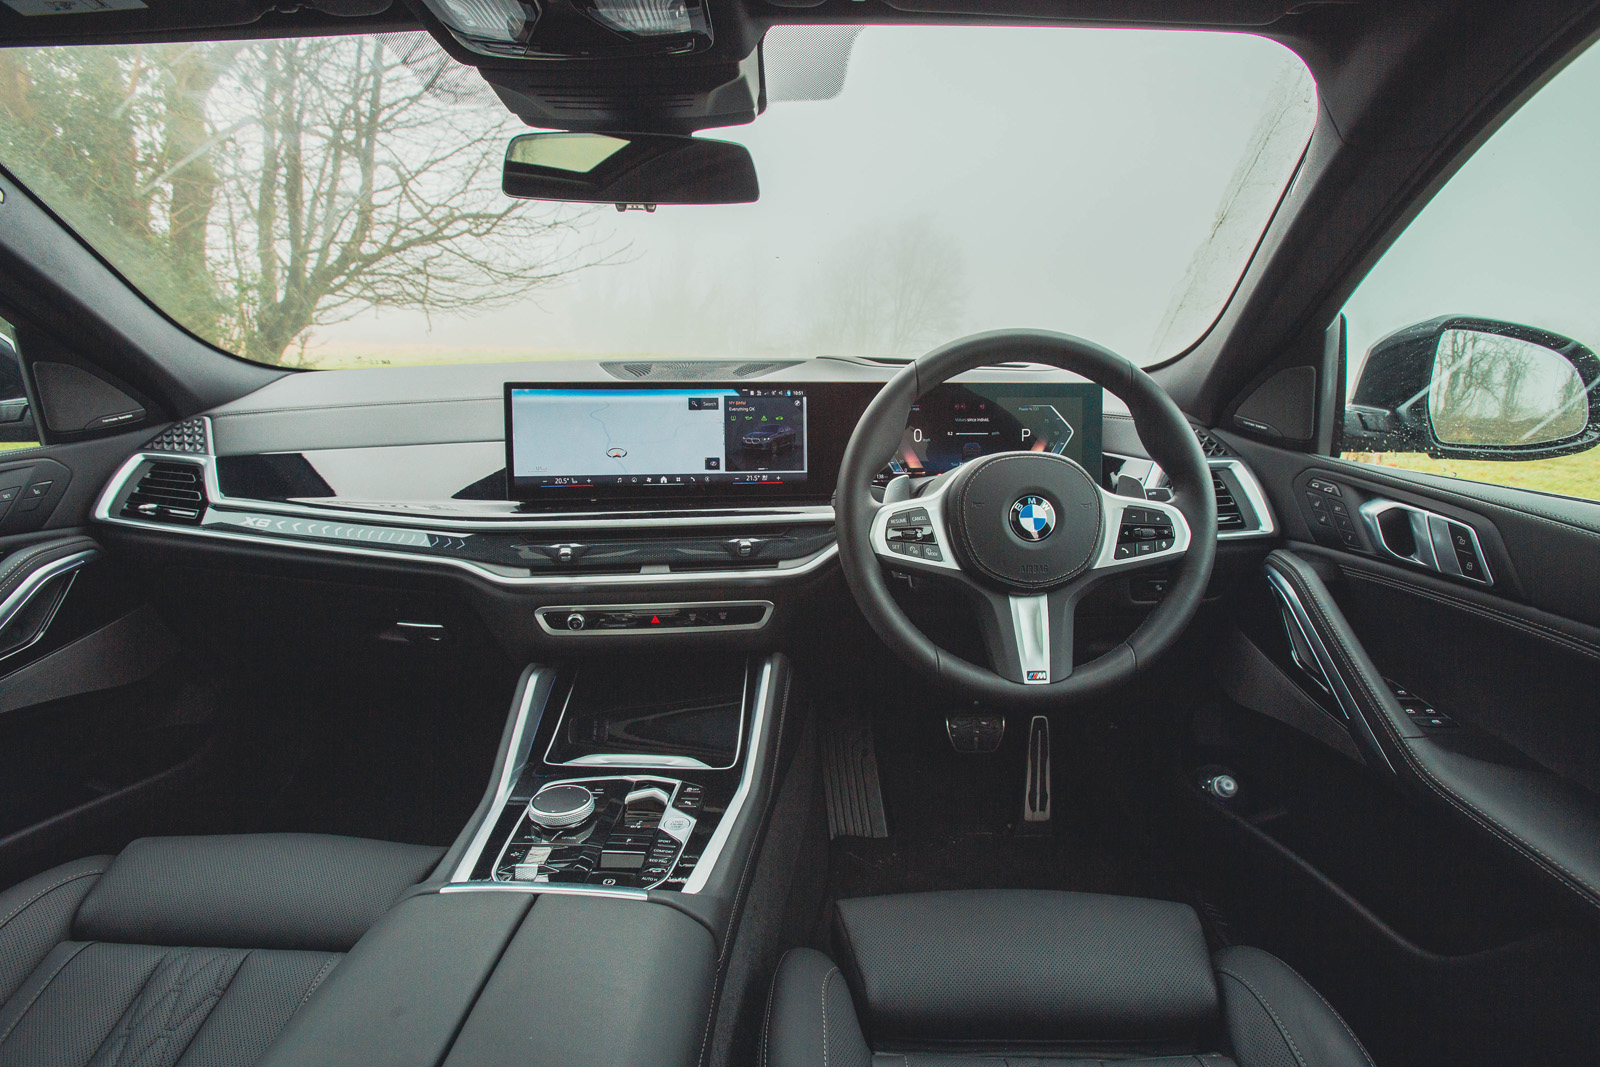 BMW X6 front interior